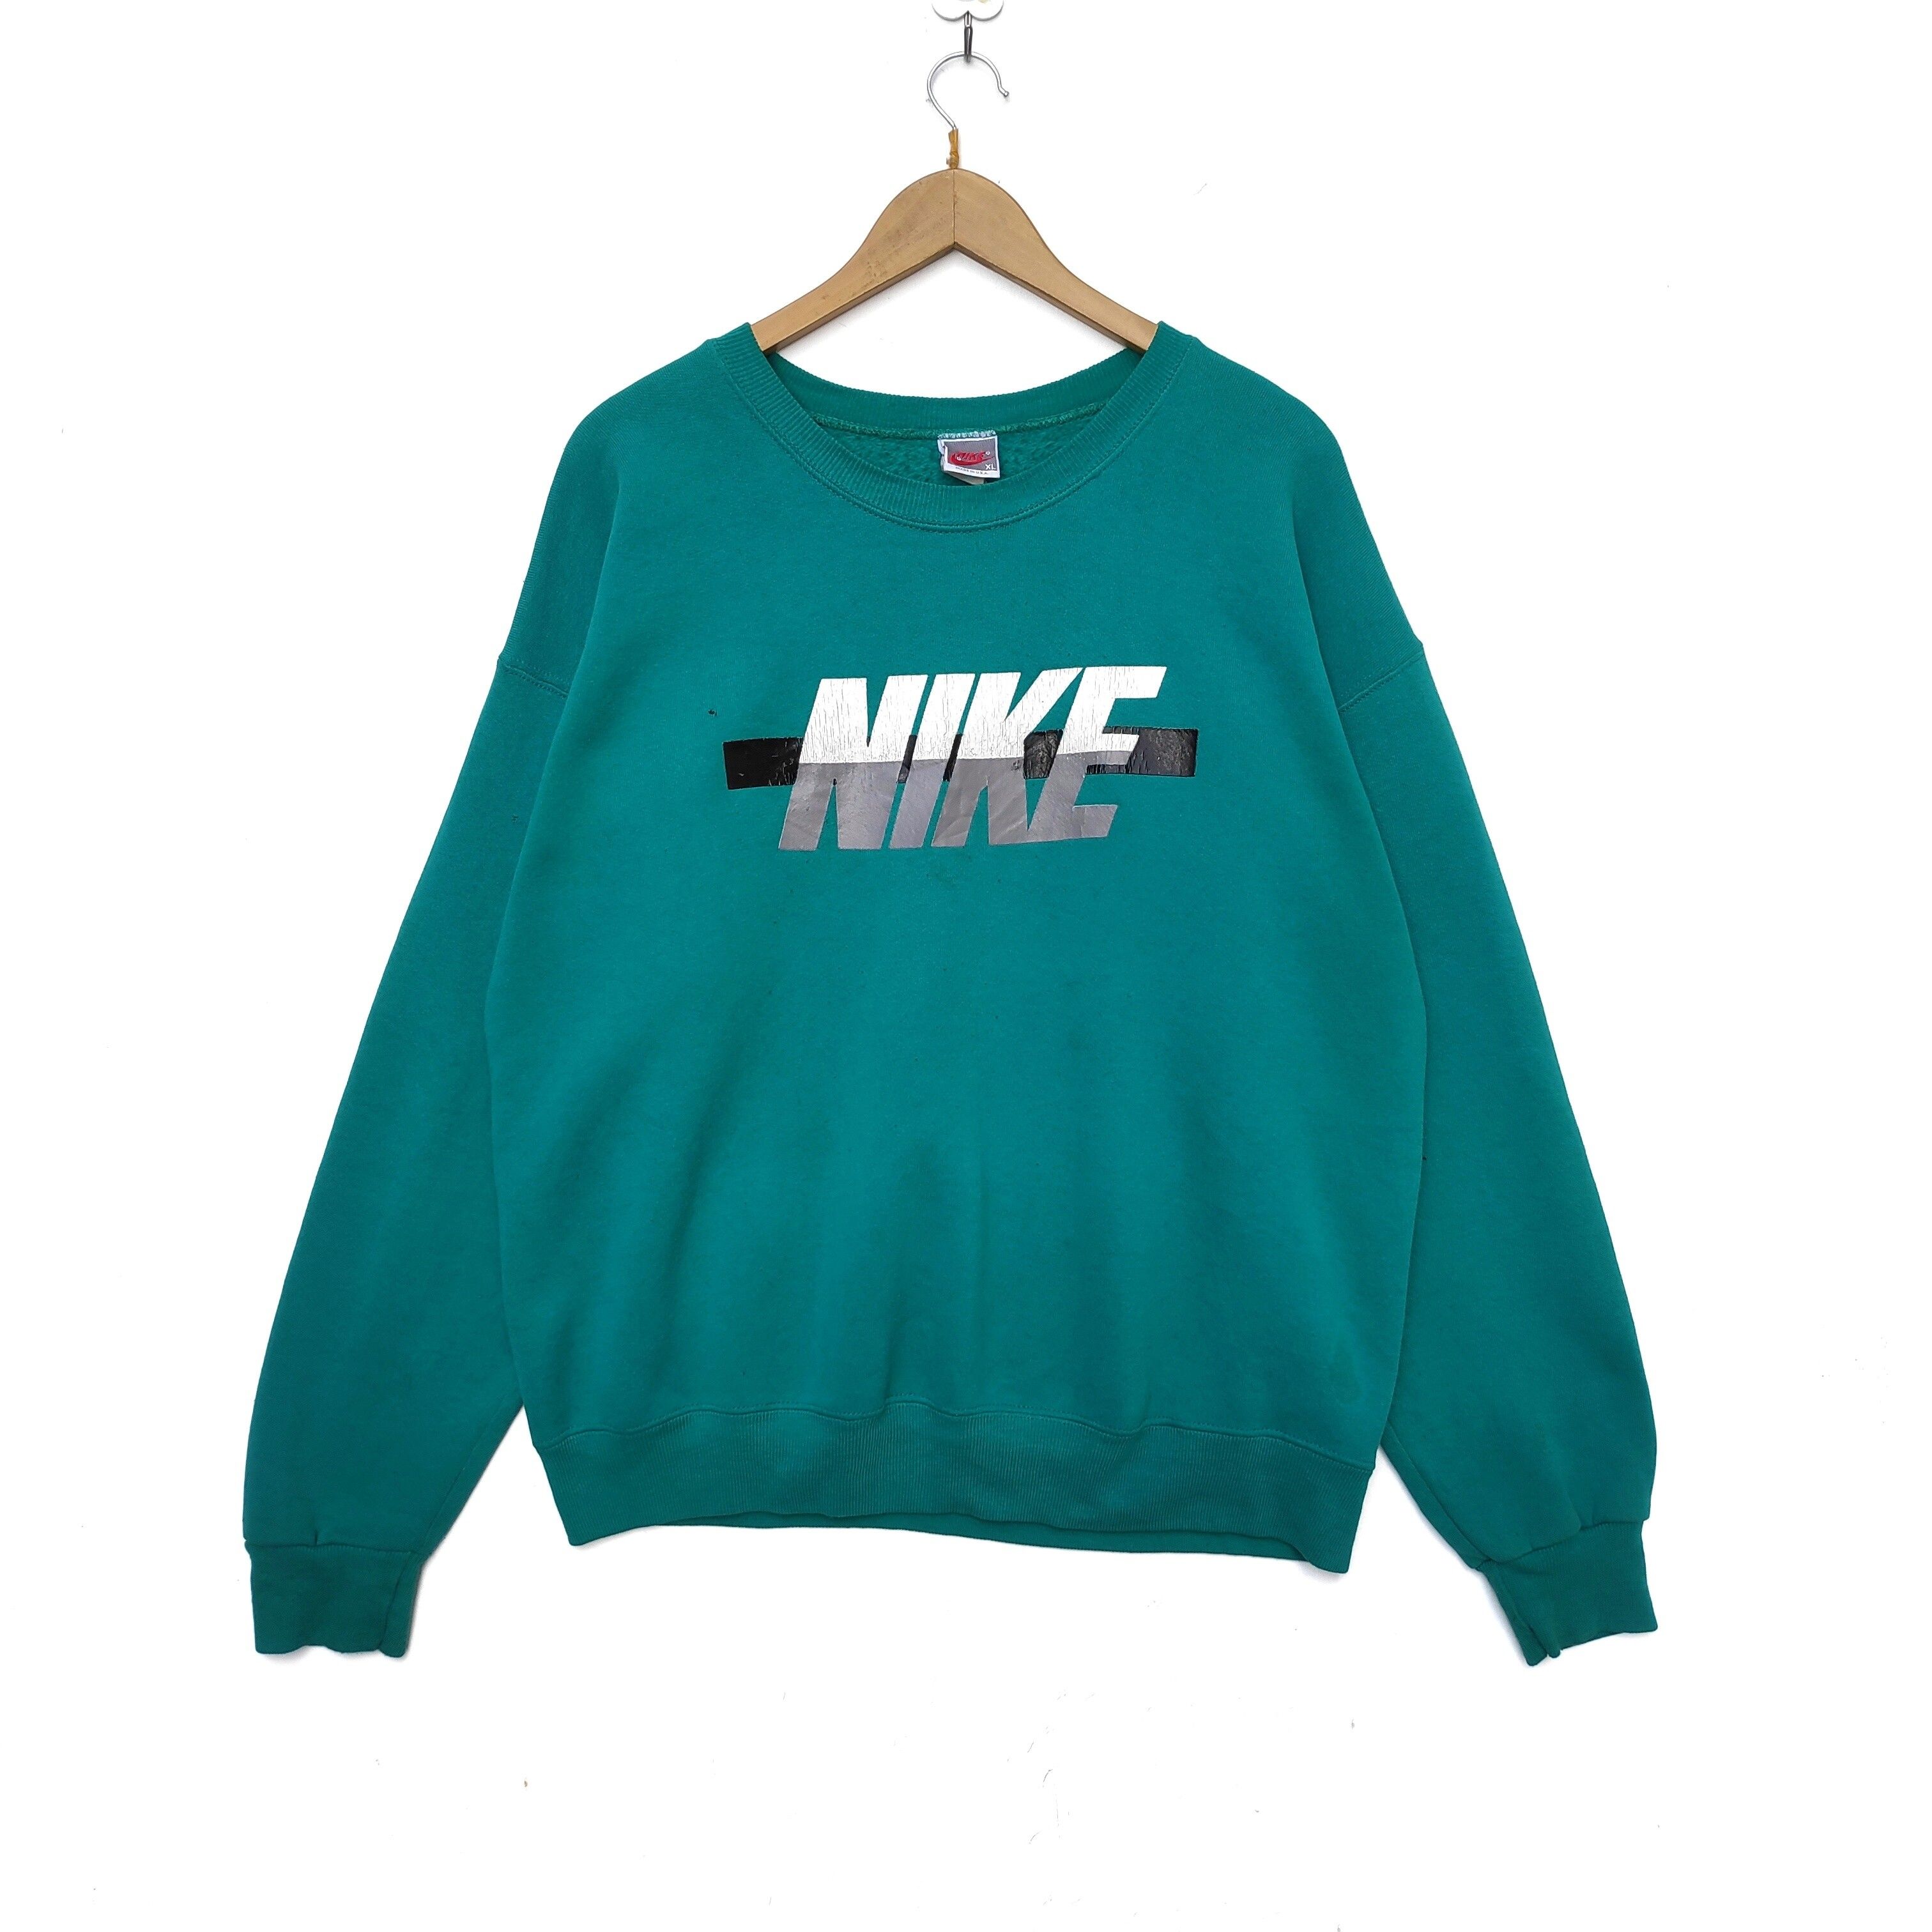 Nike Vintage Nike Sweatshirt Large Green Dope 90s Streetwear Size US L / EU 52-54 / 3 - 1 Preview